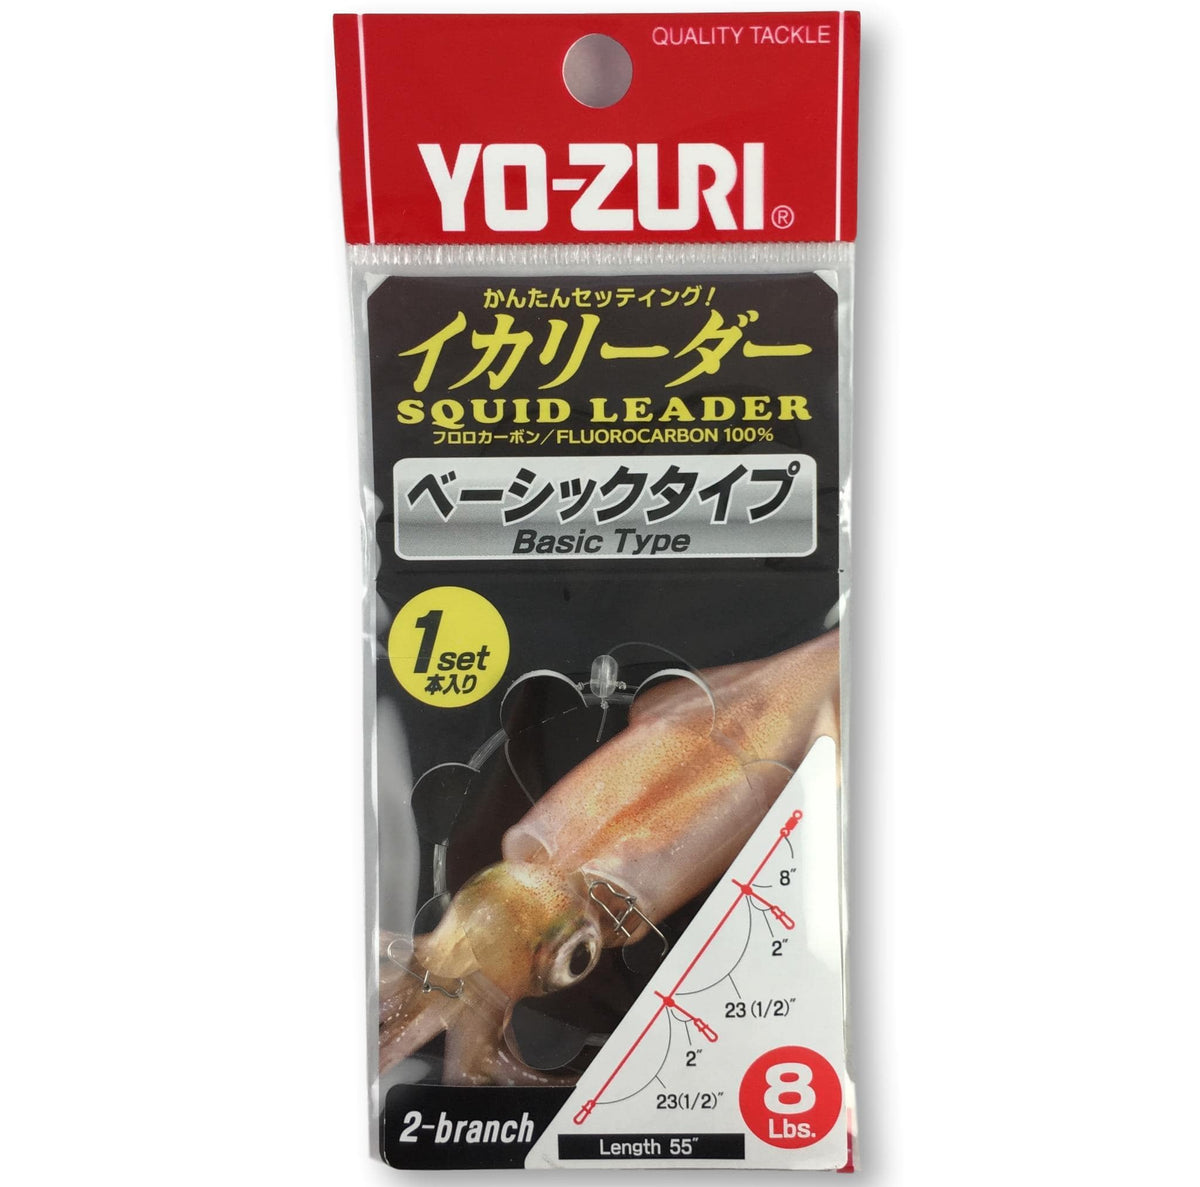 Yo-Zuri Squid Leaders 8 lbs - 1 branch - 2 sets